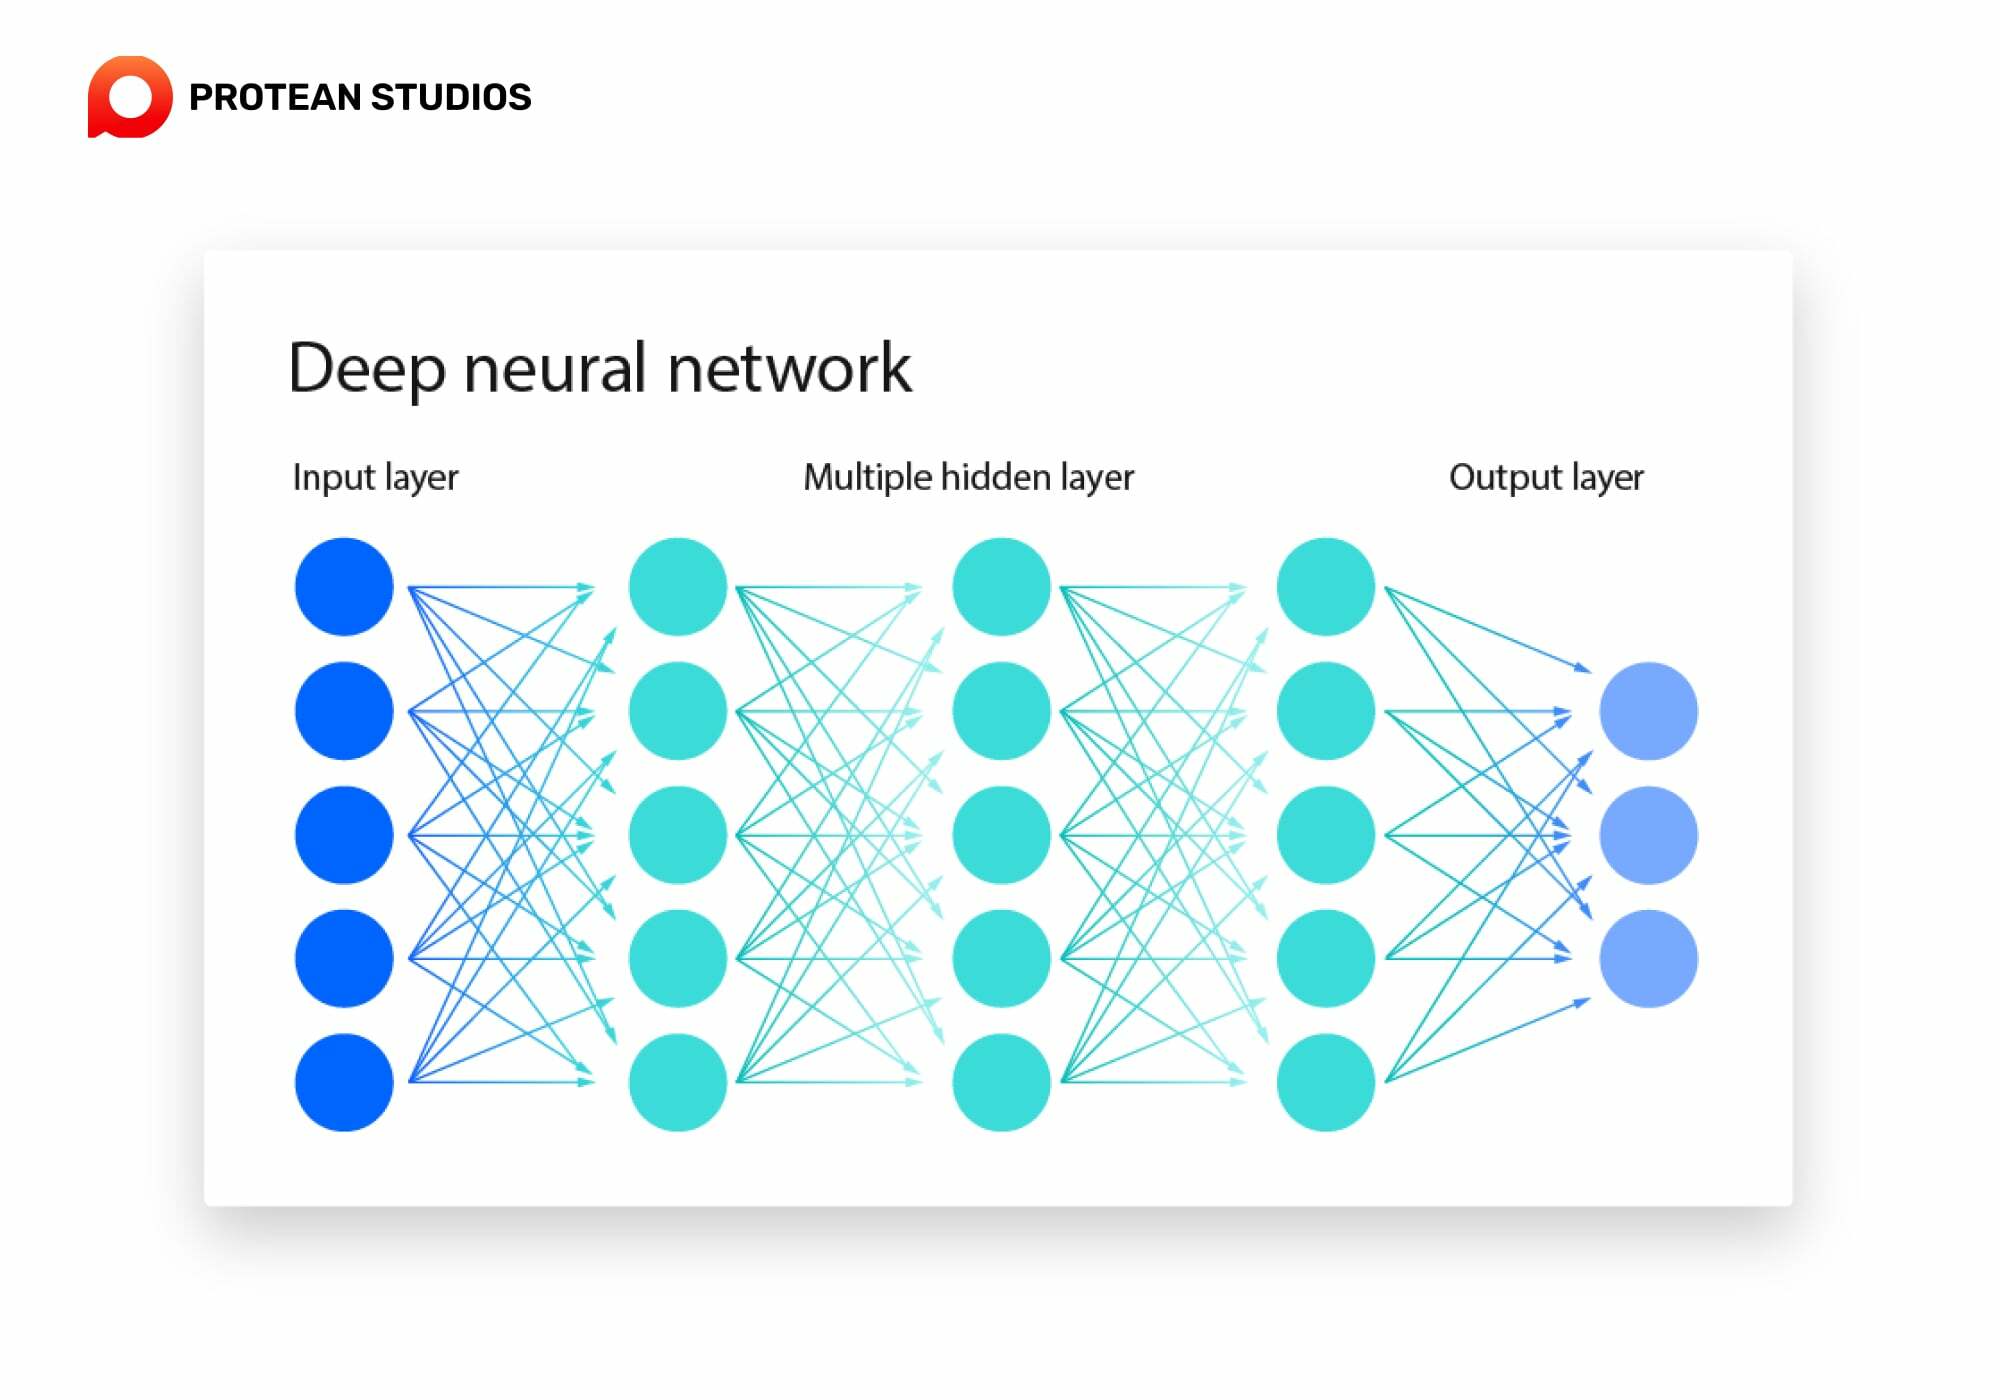 CDPs take advantage of deep neural network